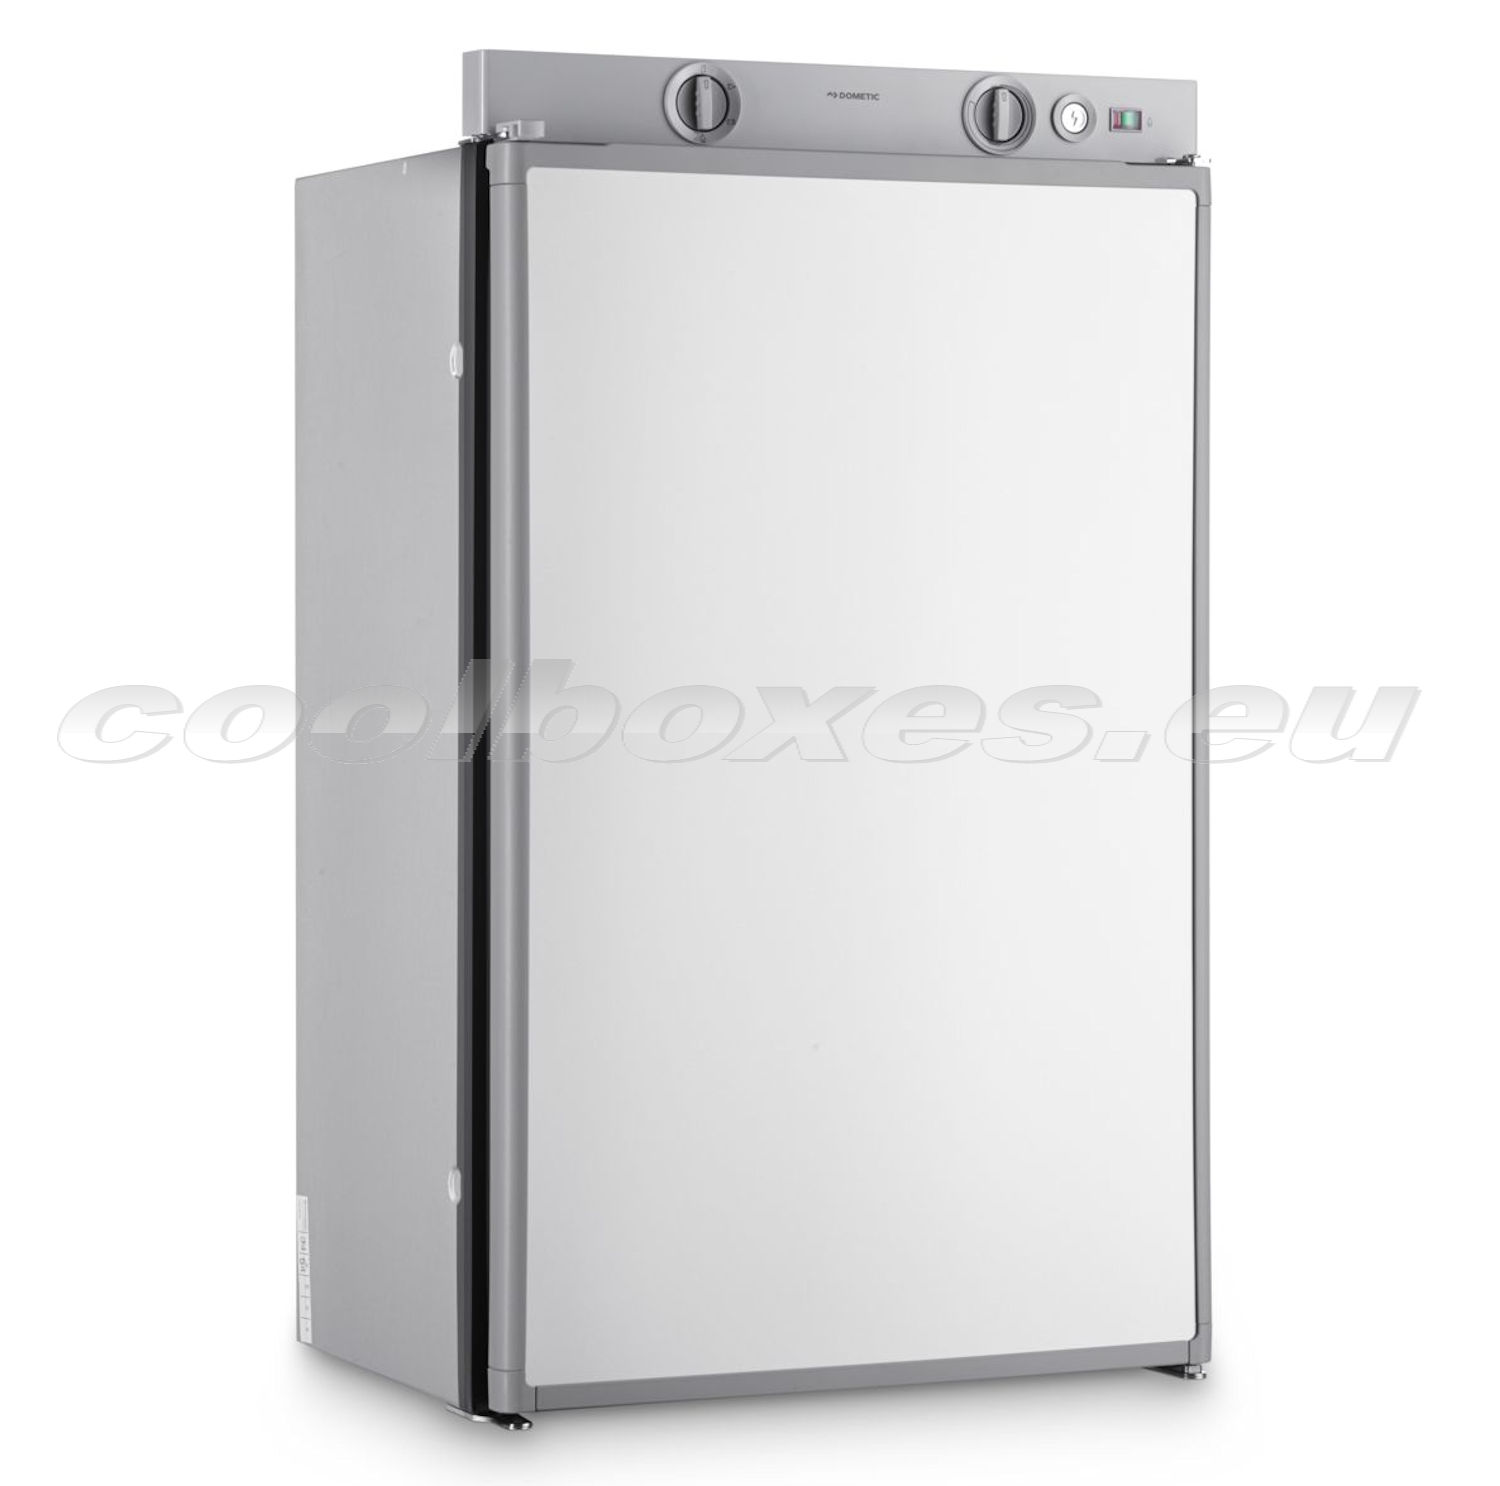 Plynová (absorpční) chladnička Dometic RM 5380 - 12V DC, 230V AC, plyn 